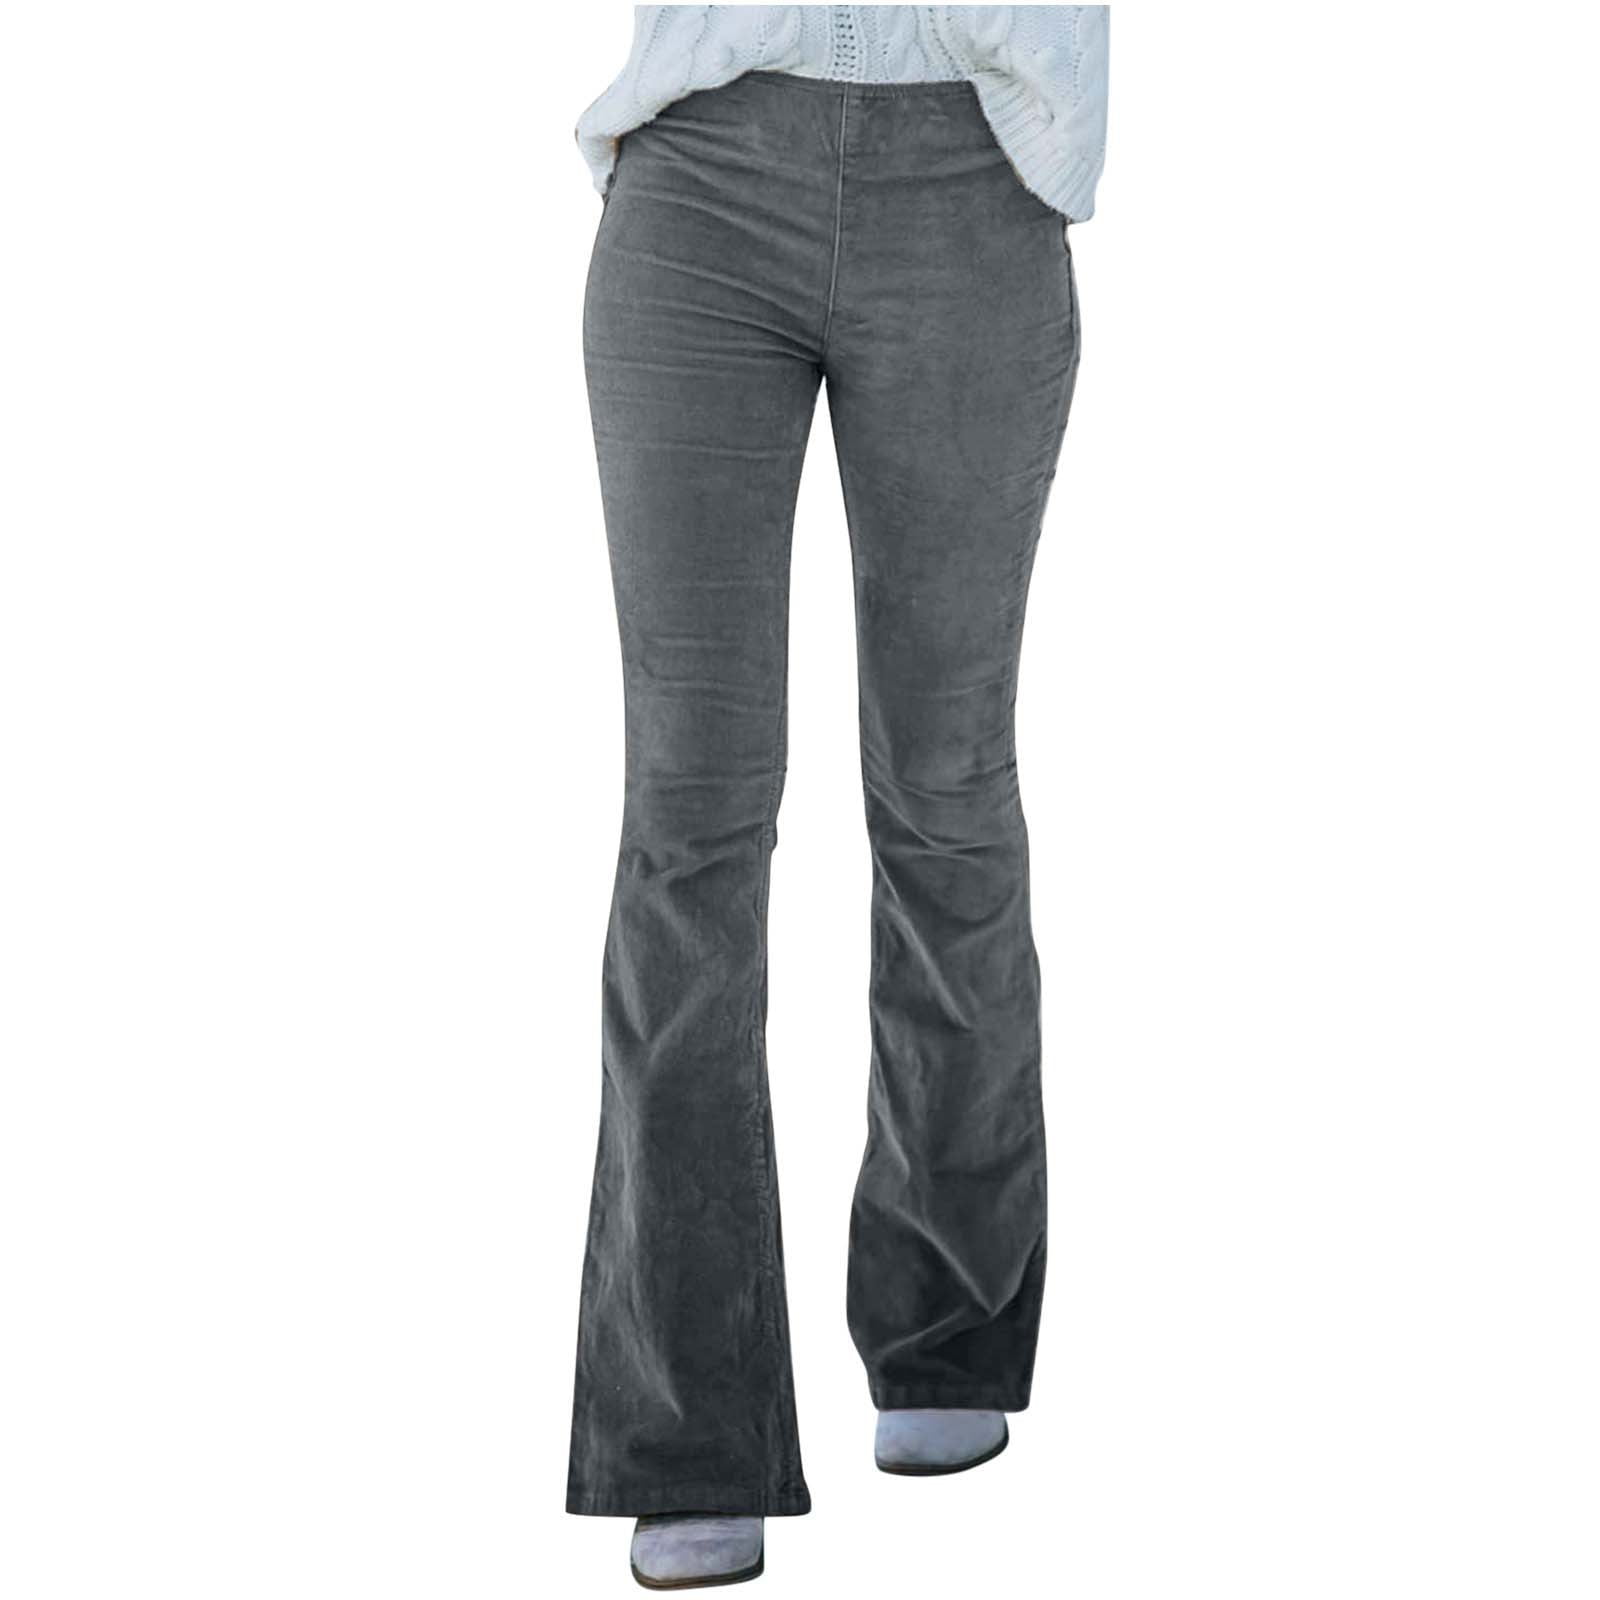 YM YOUMU Men Vintage 60s 70s Jeans Denim Bell Bottom Slim Fit Flared Pants  Trousers